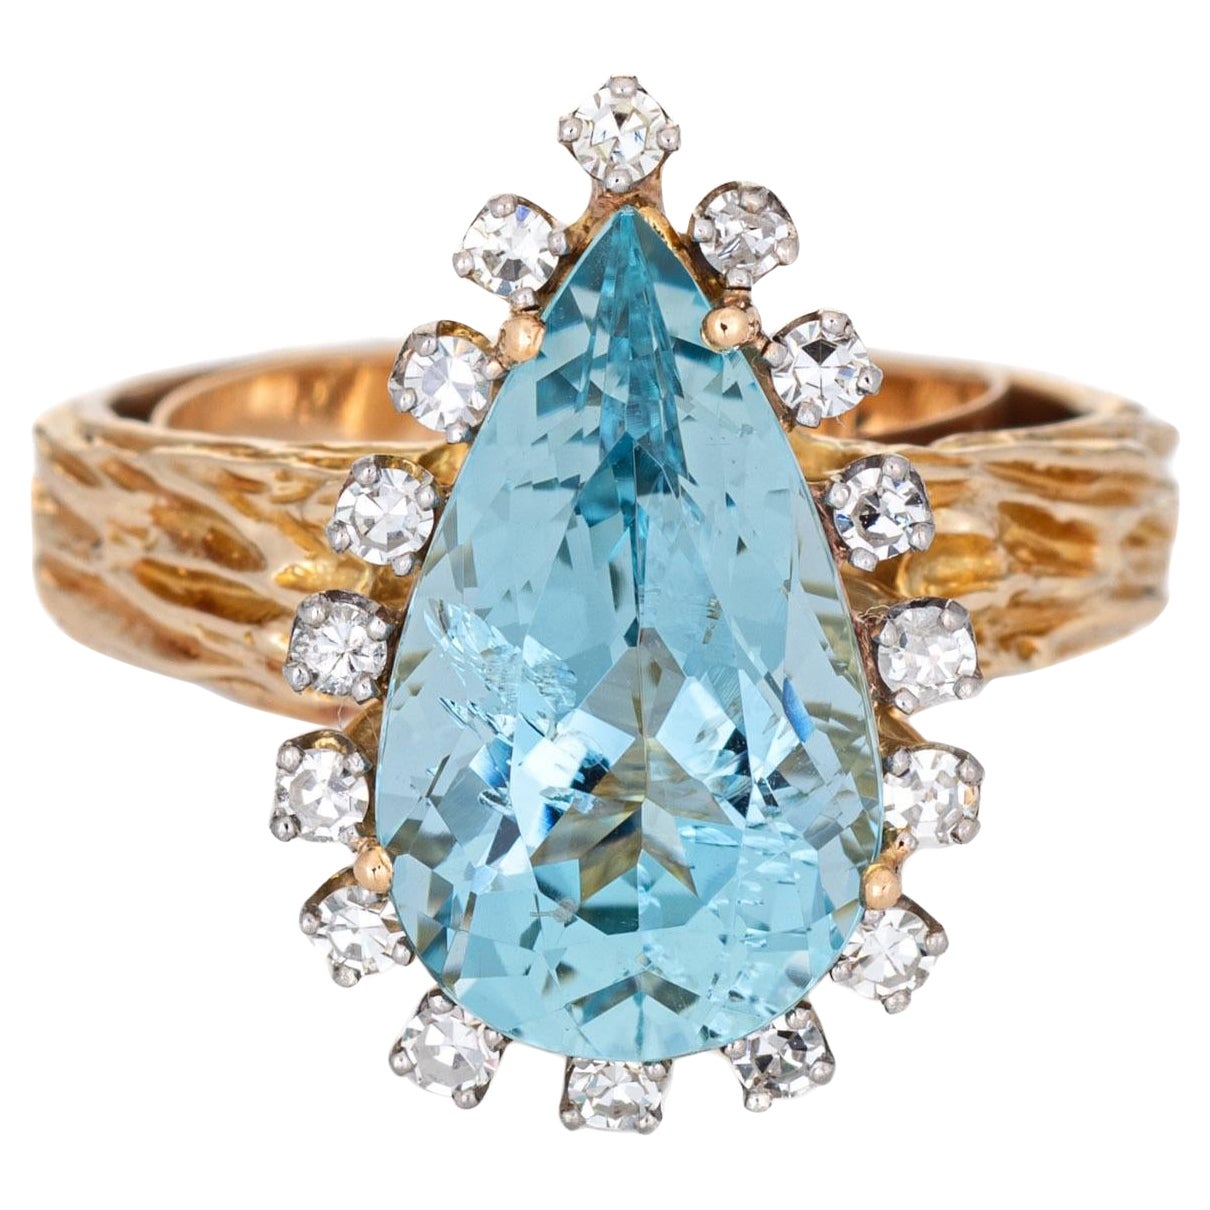 Vintage Aquamarine Diamond Ring Pear Cut 14k Yellow Gold Fine Jewelry